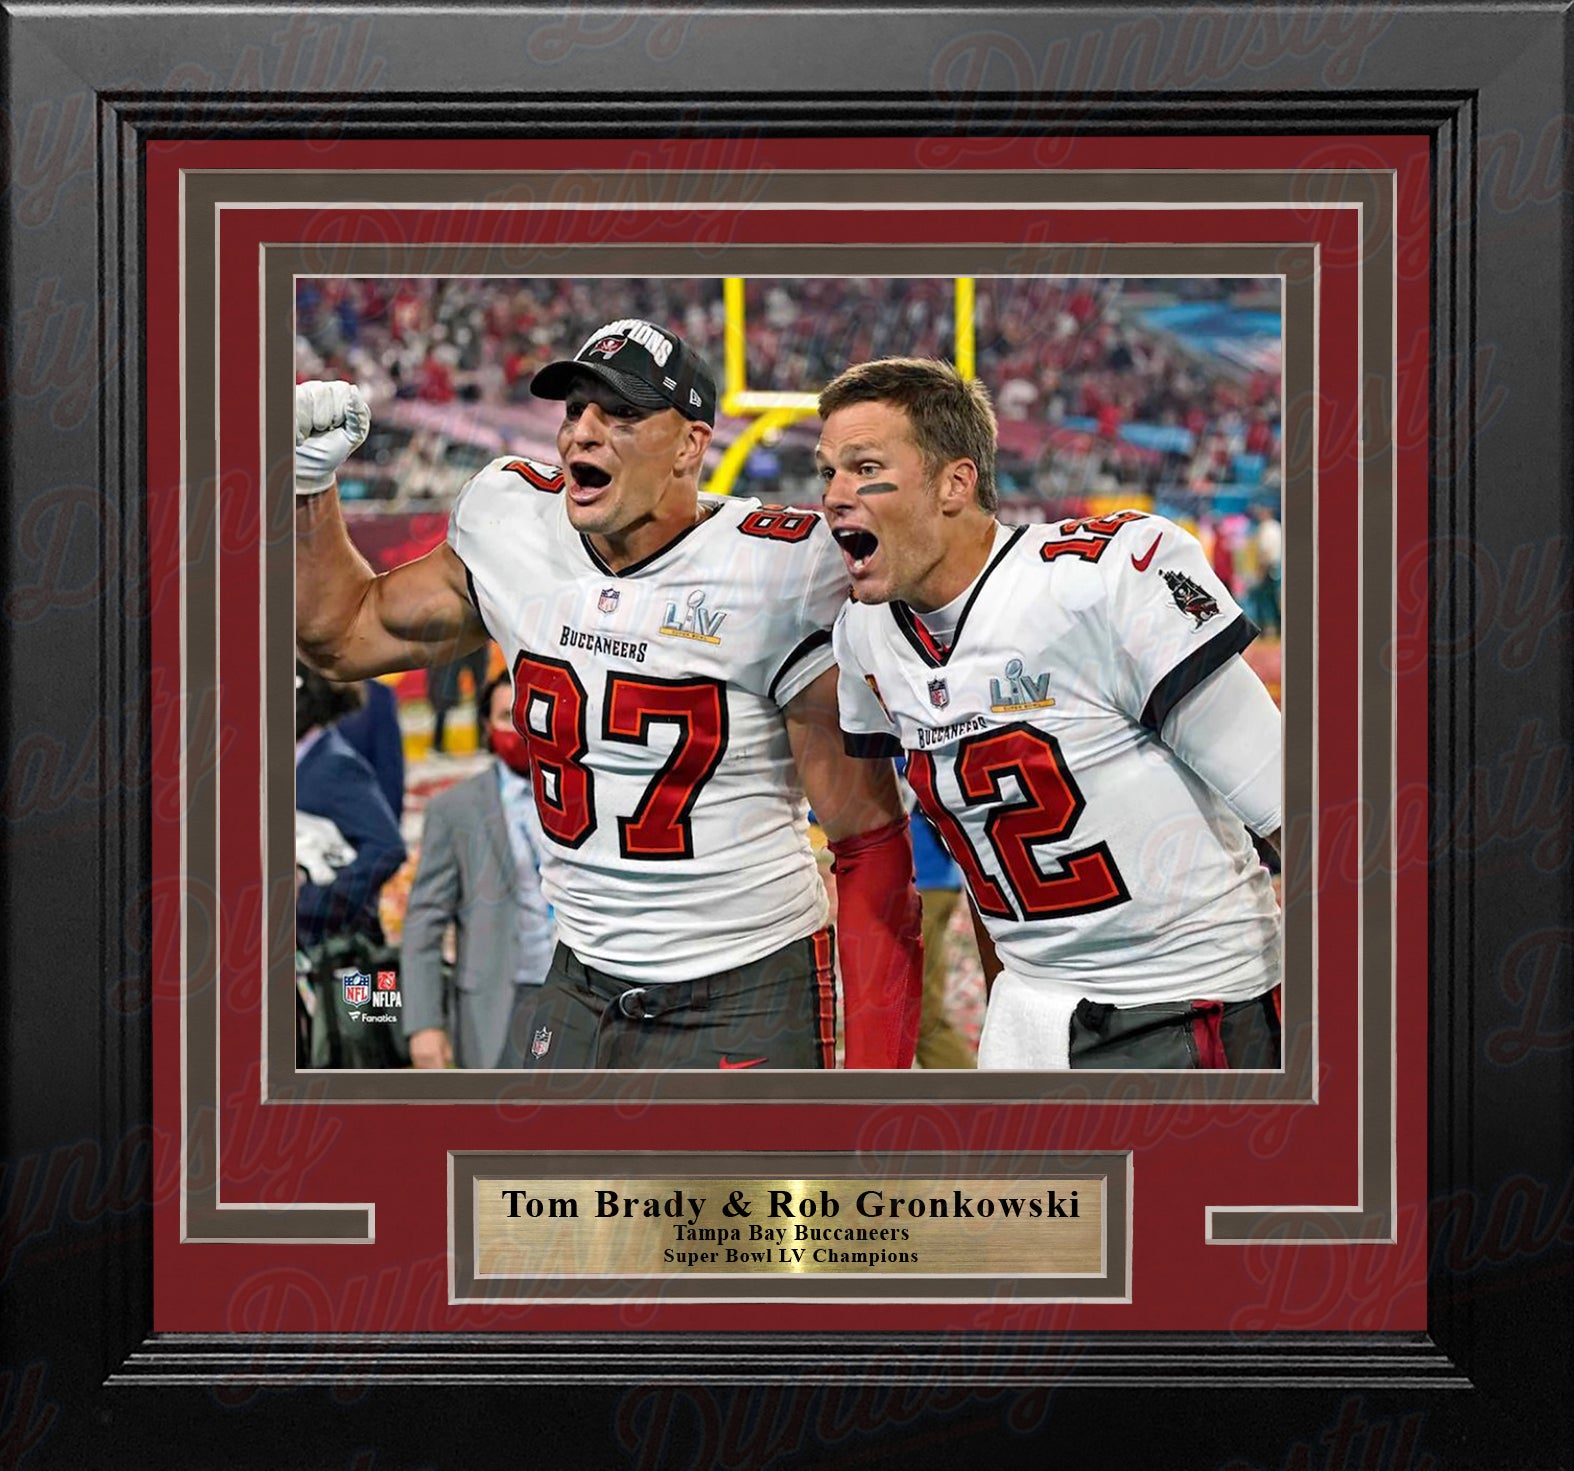 Tom Brady & Rob Gronkowski Super Bowl LV Champions Tampa Bay Buccaneers 8x10 Framed Football Photo - Dynasty Sports & Framing 